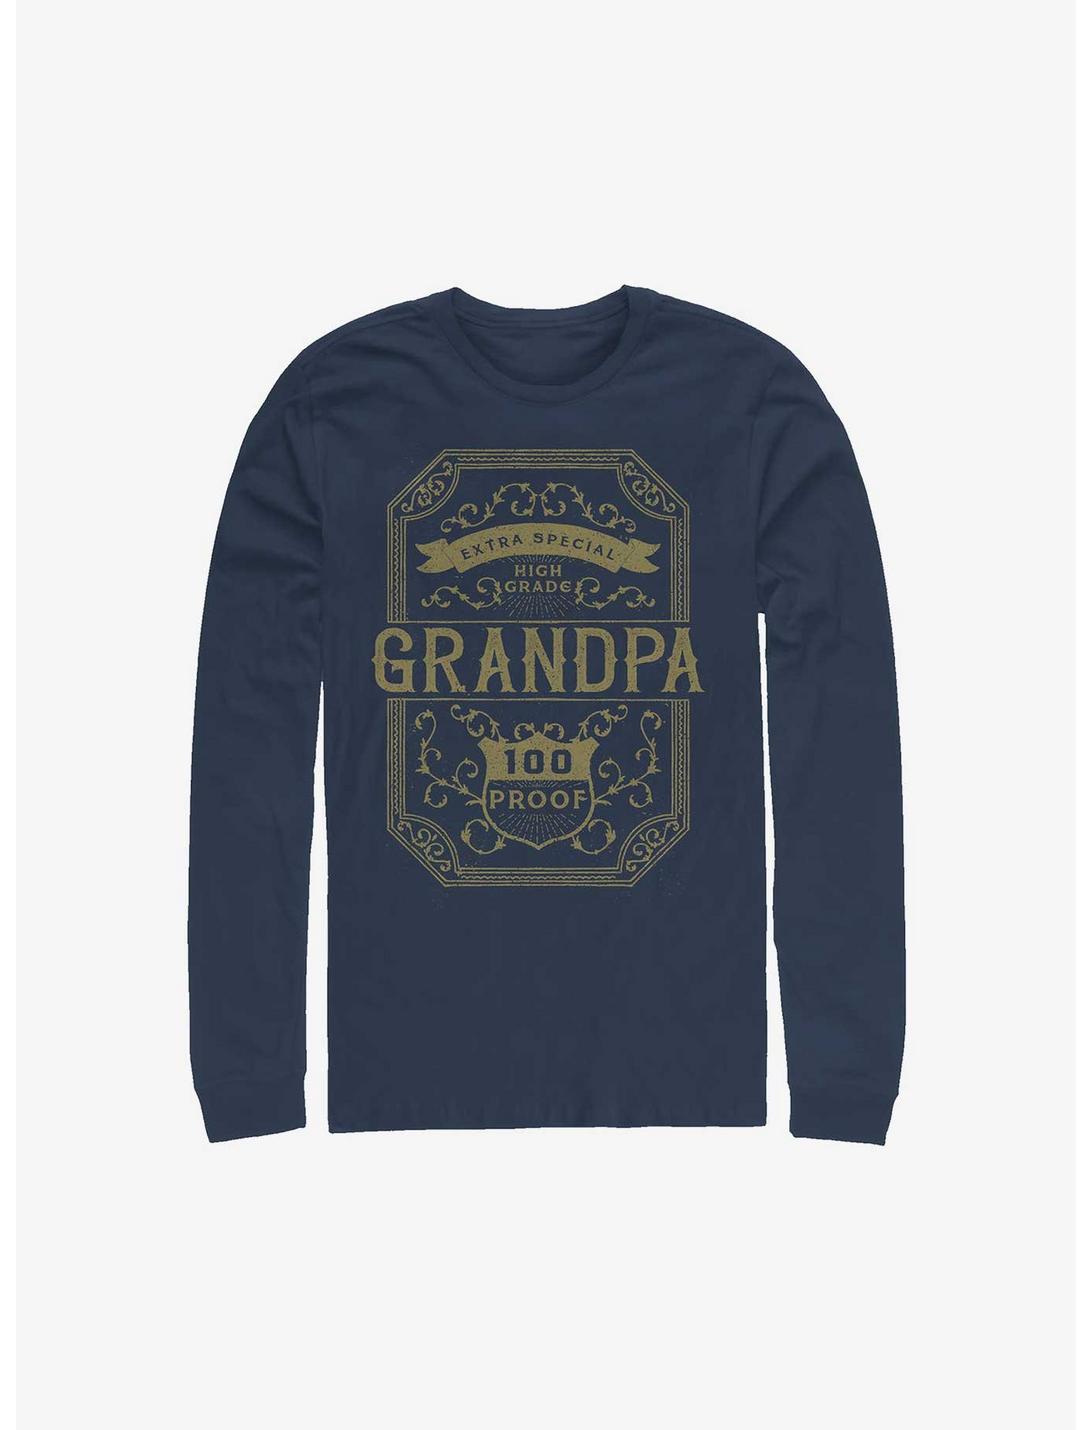 High Grade Grandpa Long-Sleeve T-Shirt, NAVY, hi-res